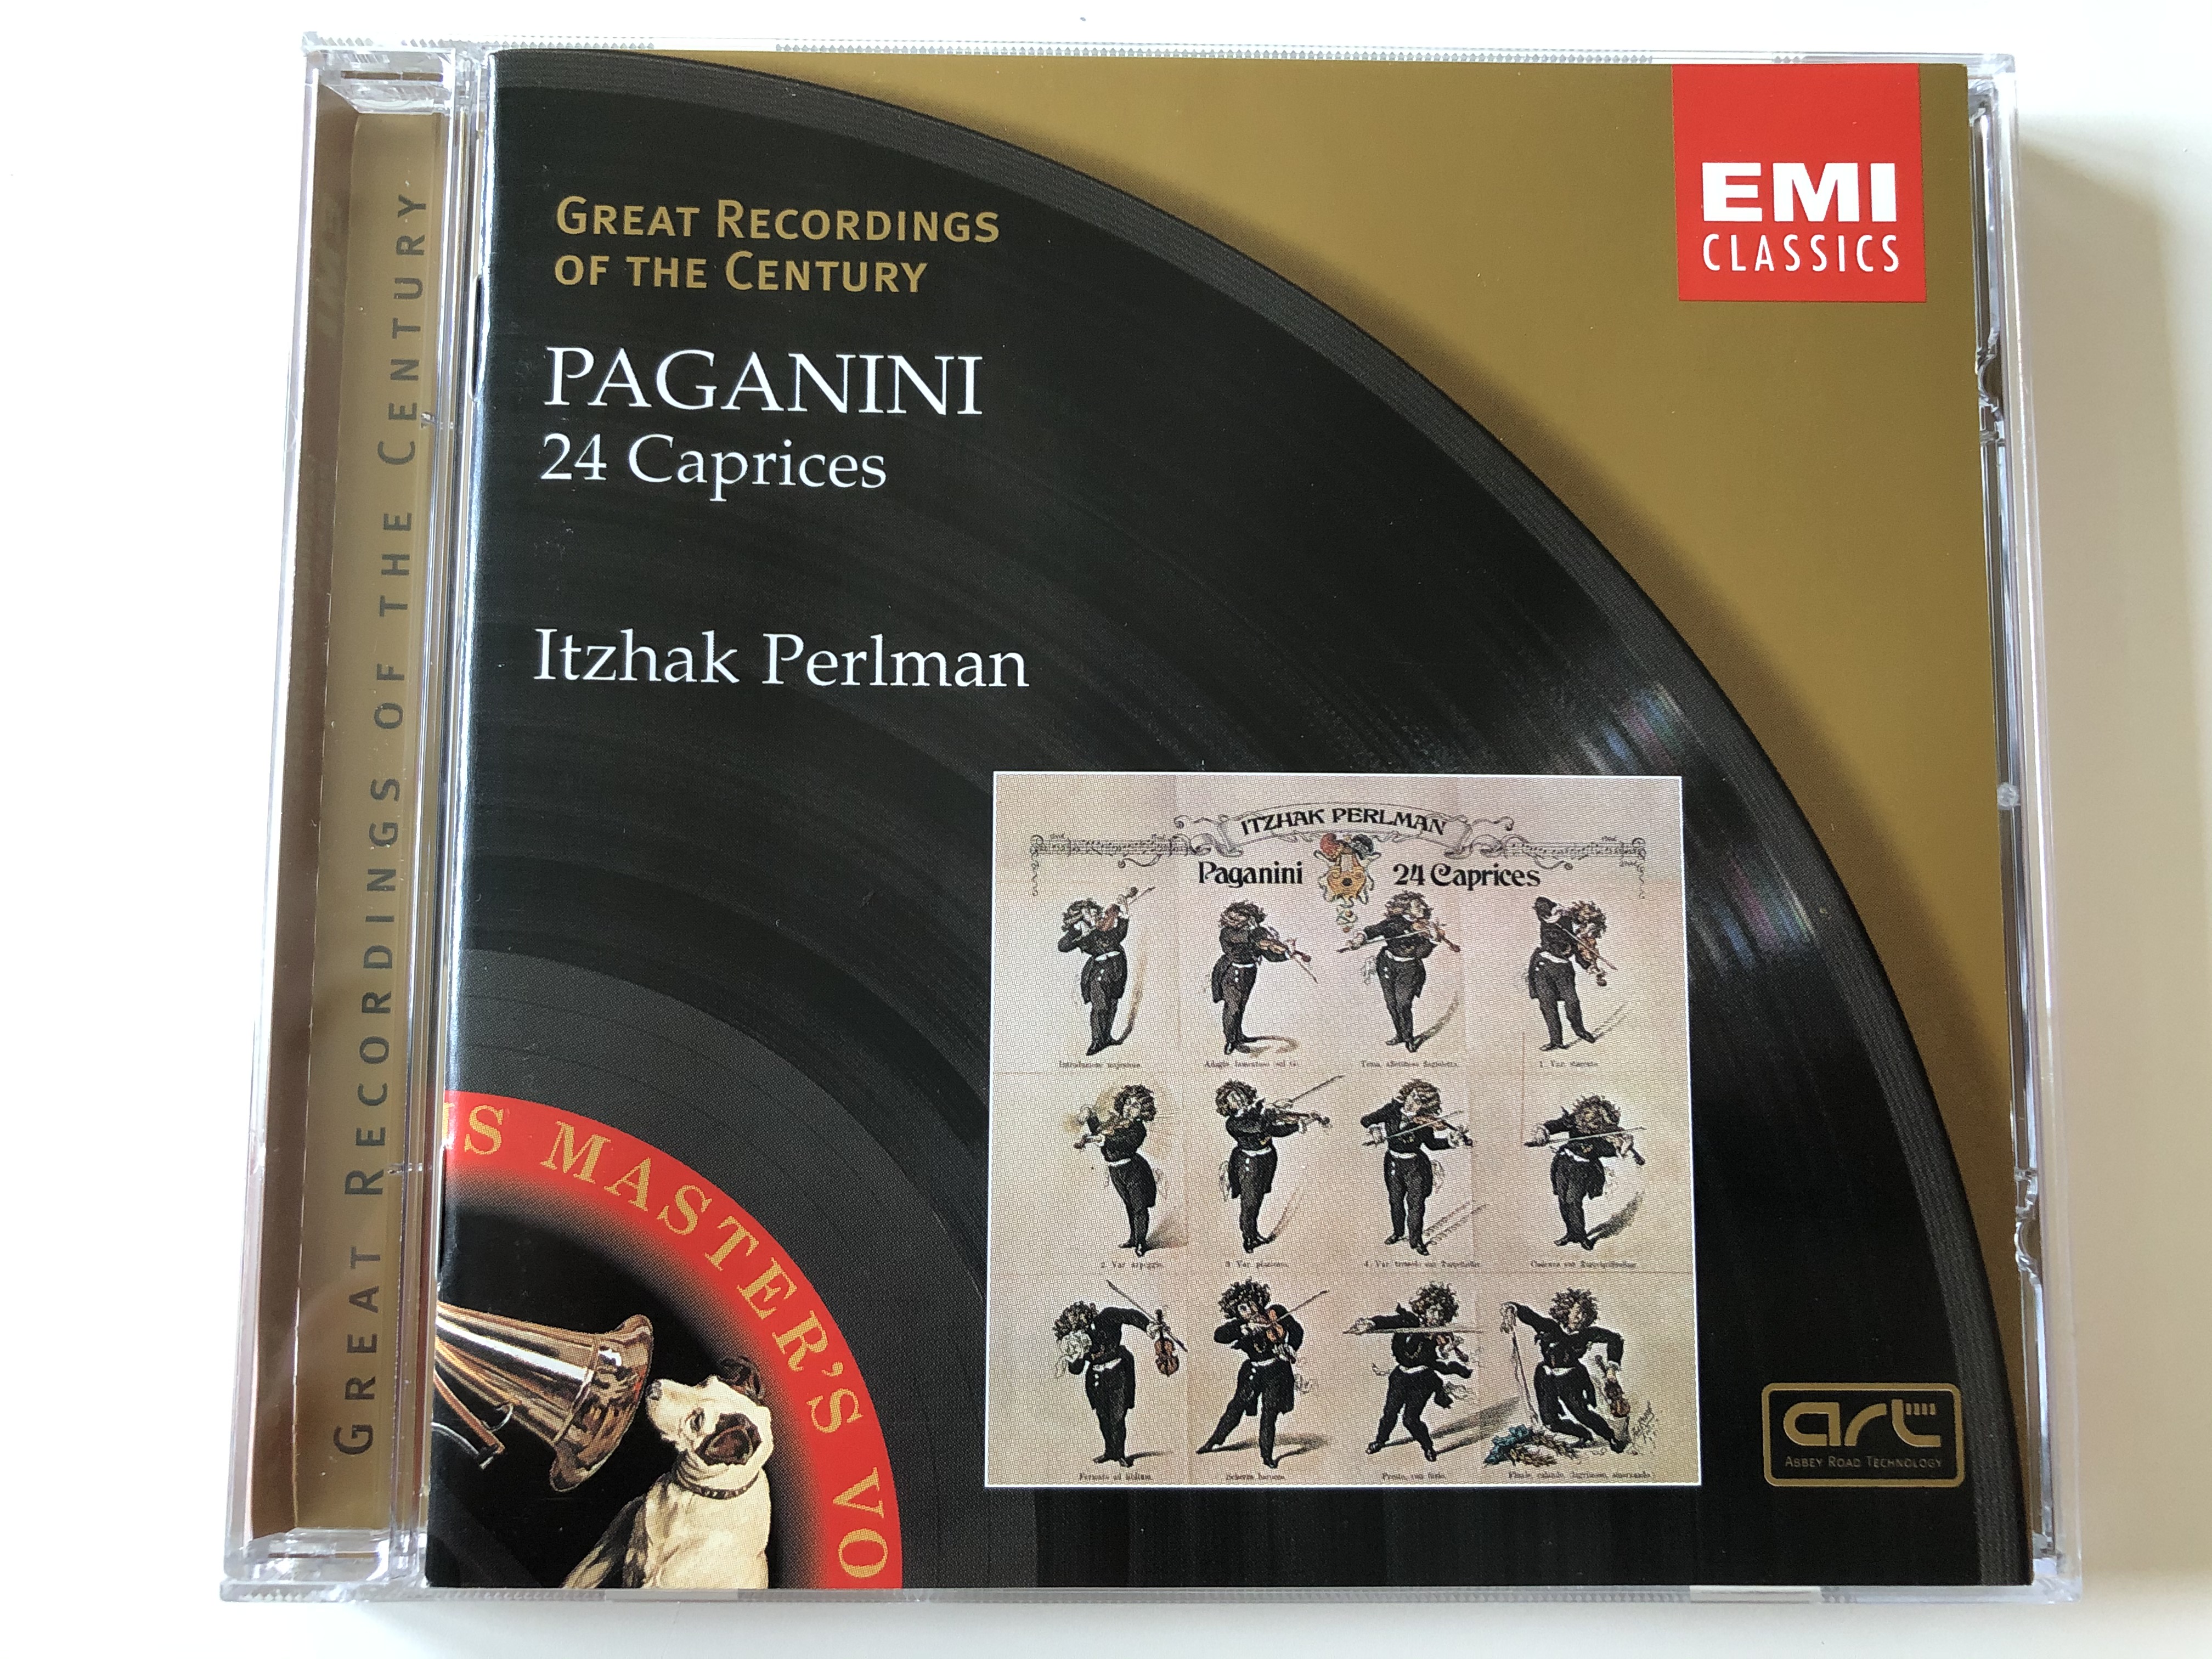 paganini-24-caprices-itzhak-perlman-great-recordings-of-the-century-emi-classics-audio-cd-2000-stereo-7243-5-67237-2-6-1-.jpg